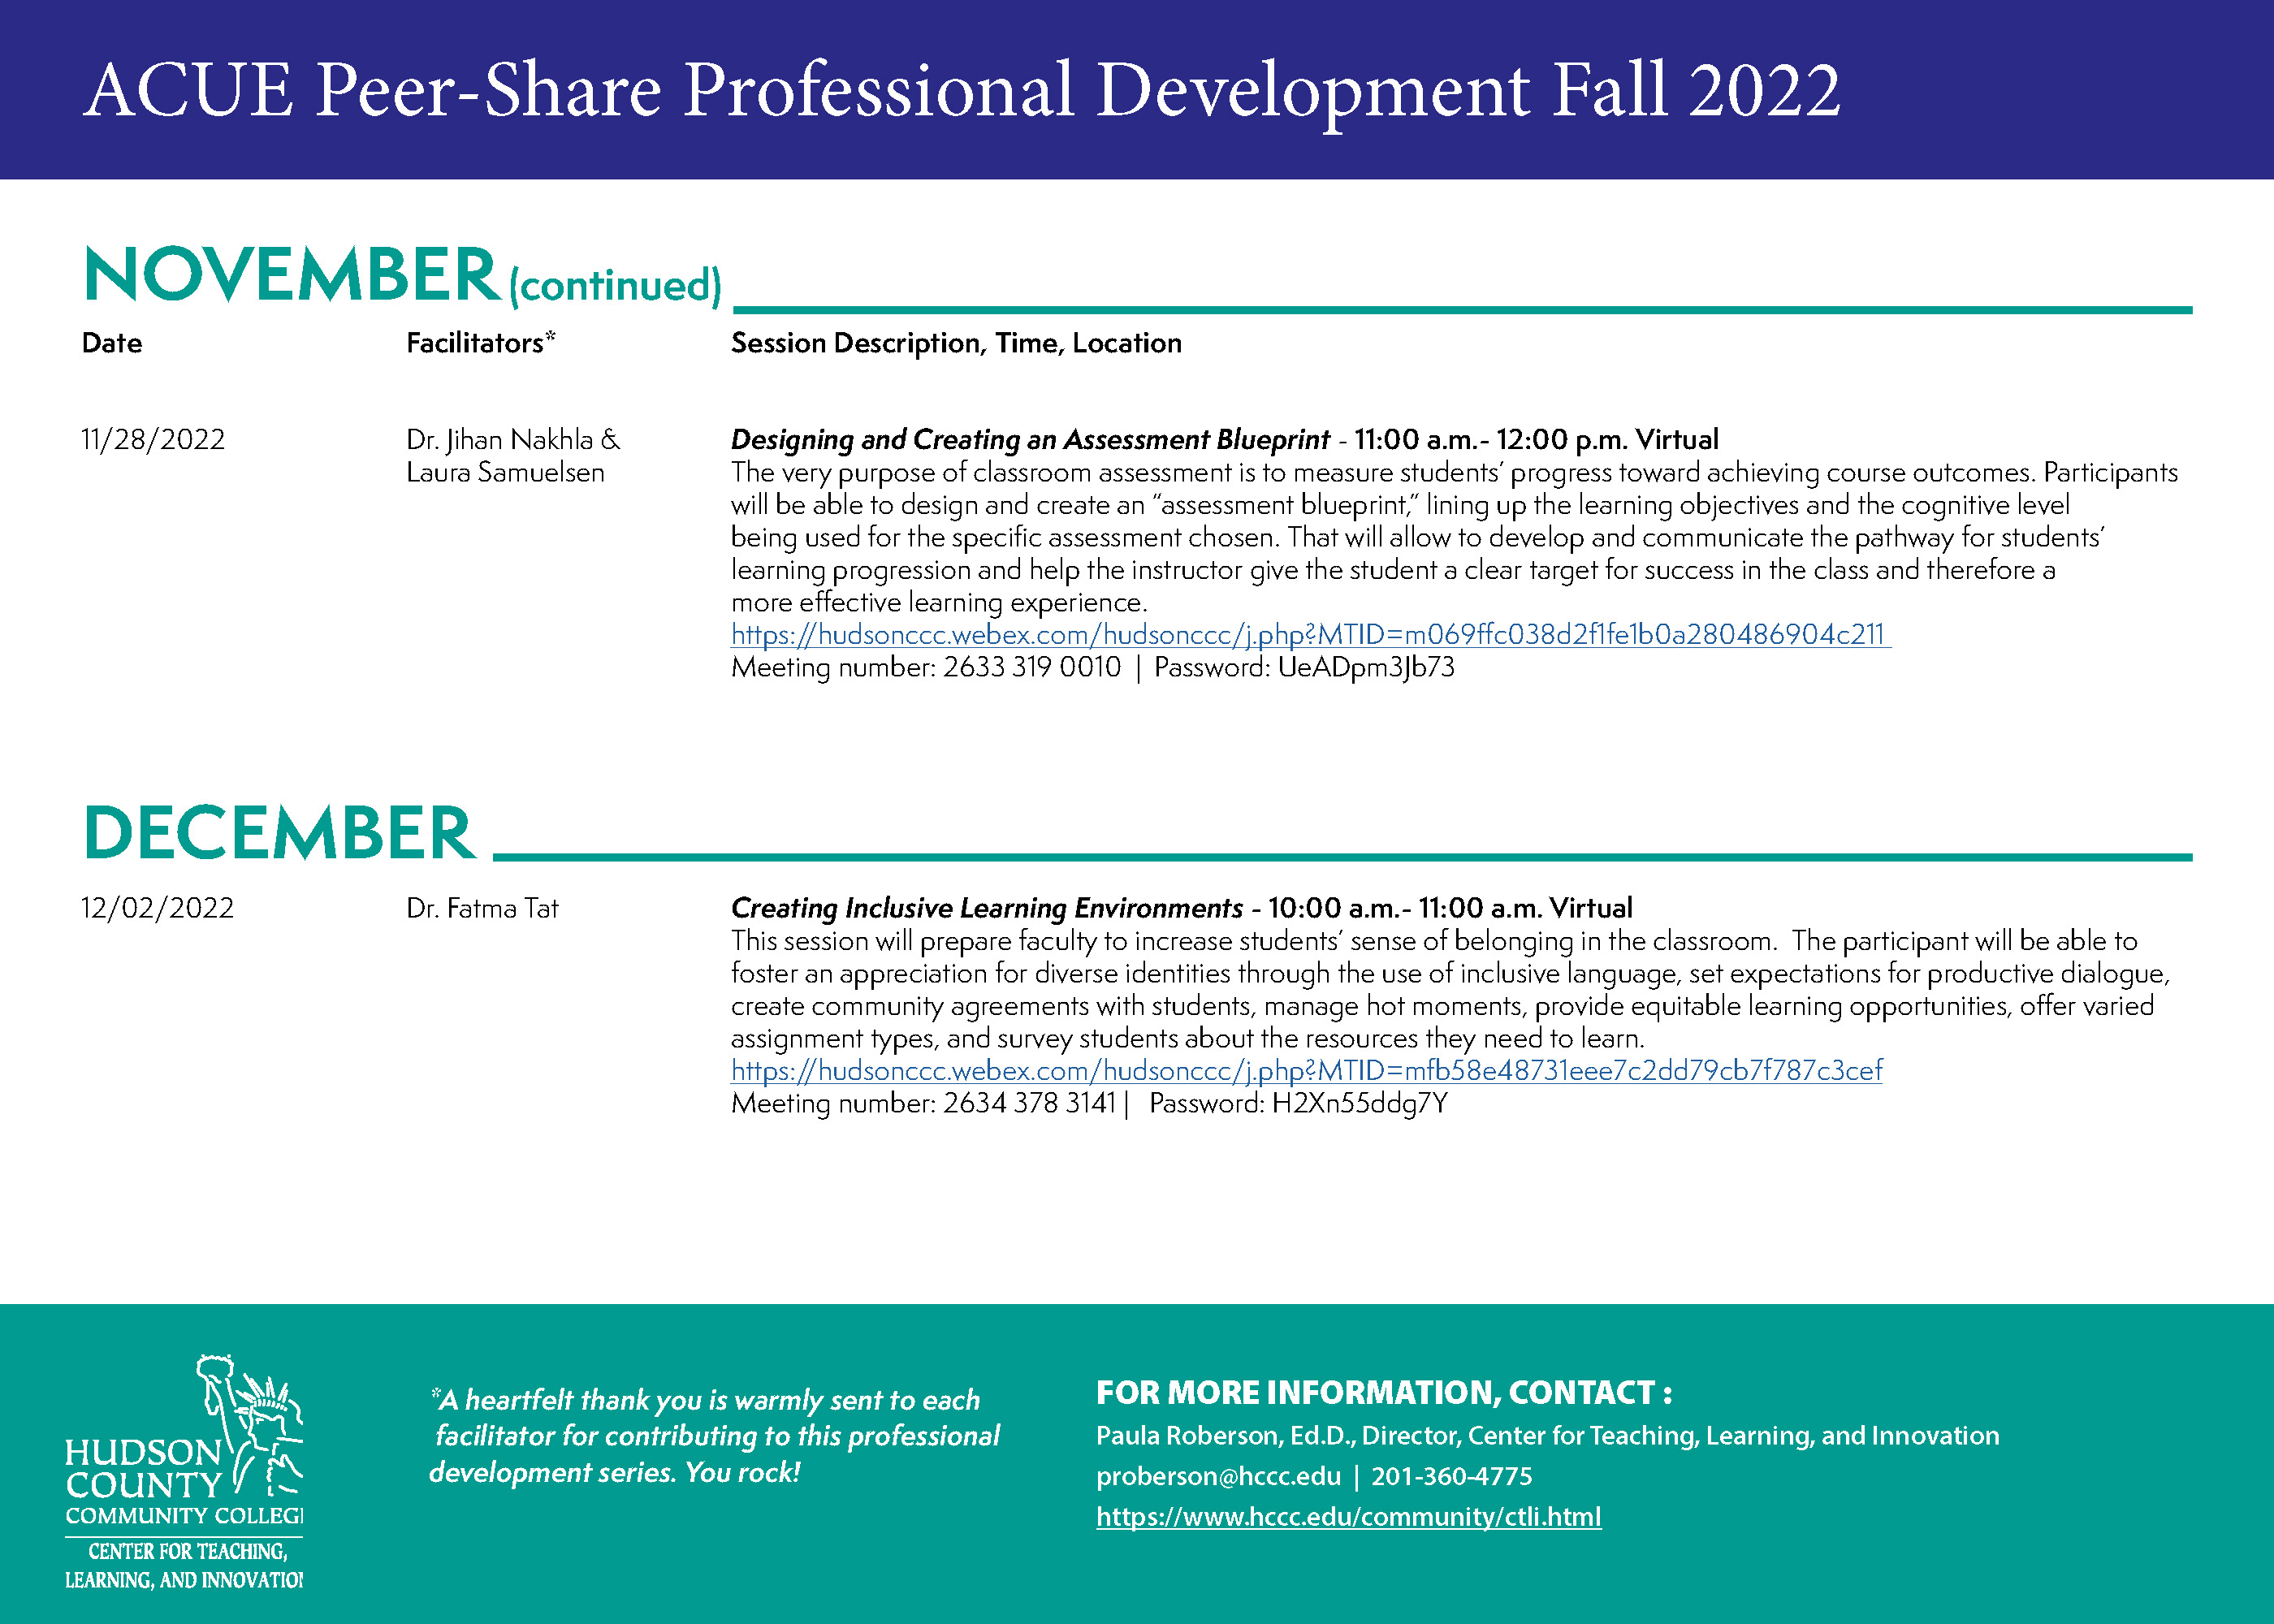 ACUE Peer-Share Professional Development Fall 2022 - December Schedule